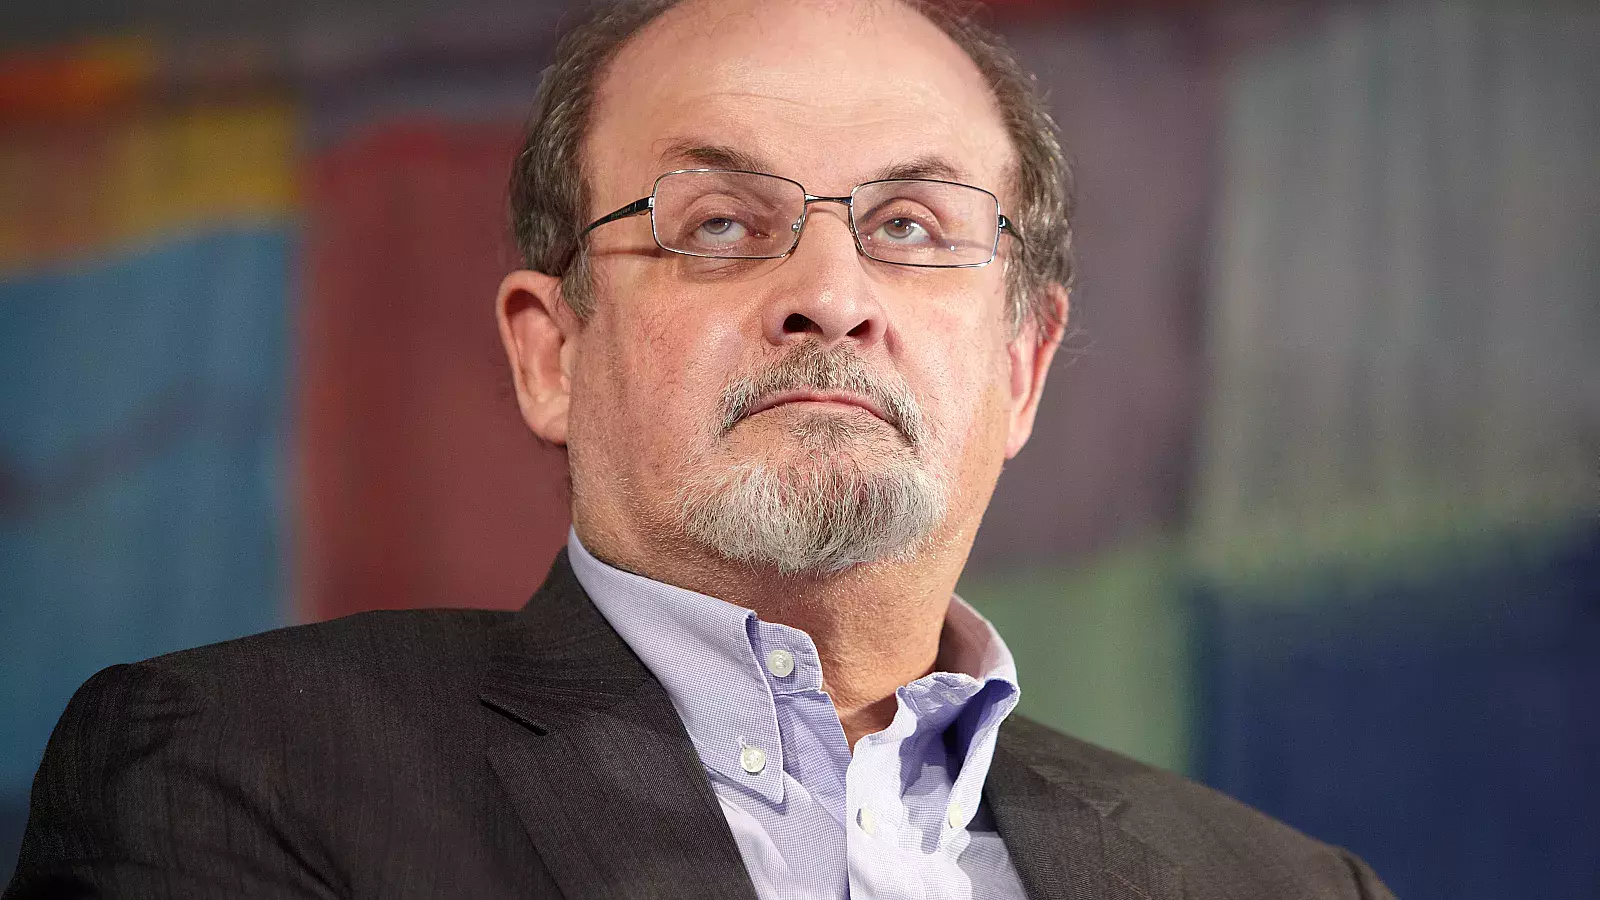 Escritor Salman Rushdie quedó con daños permanentes graves luego de ser apuñalado en agosto